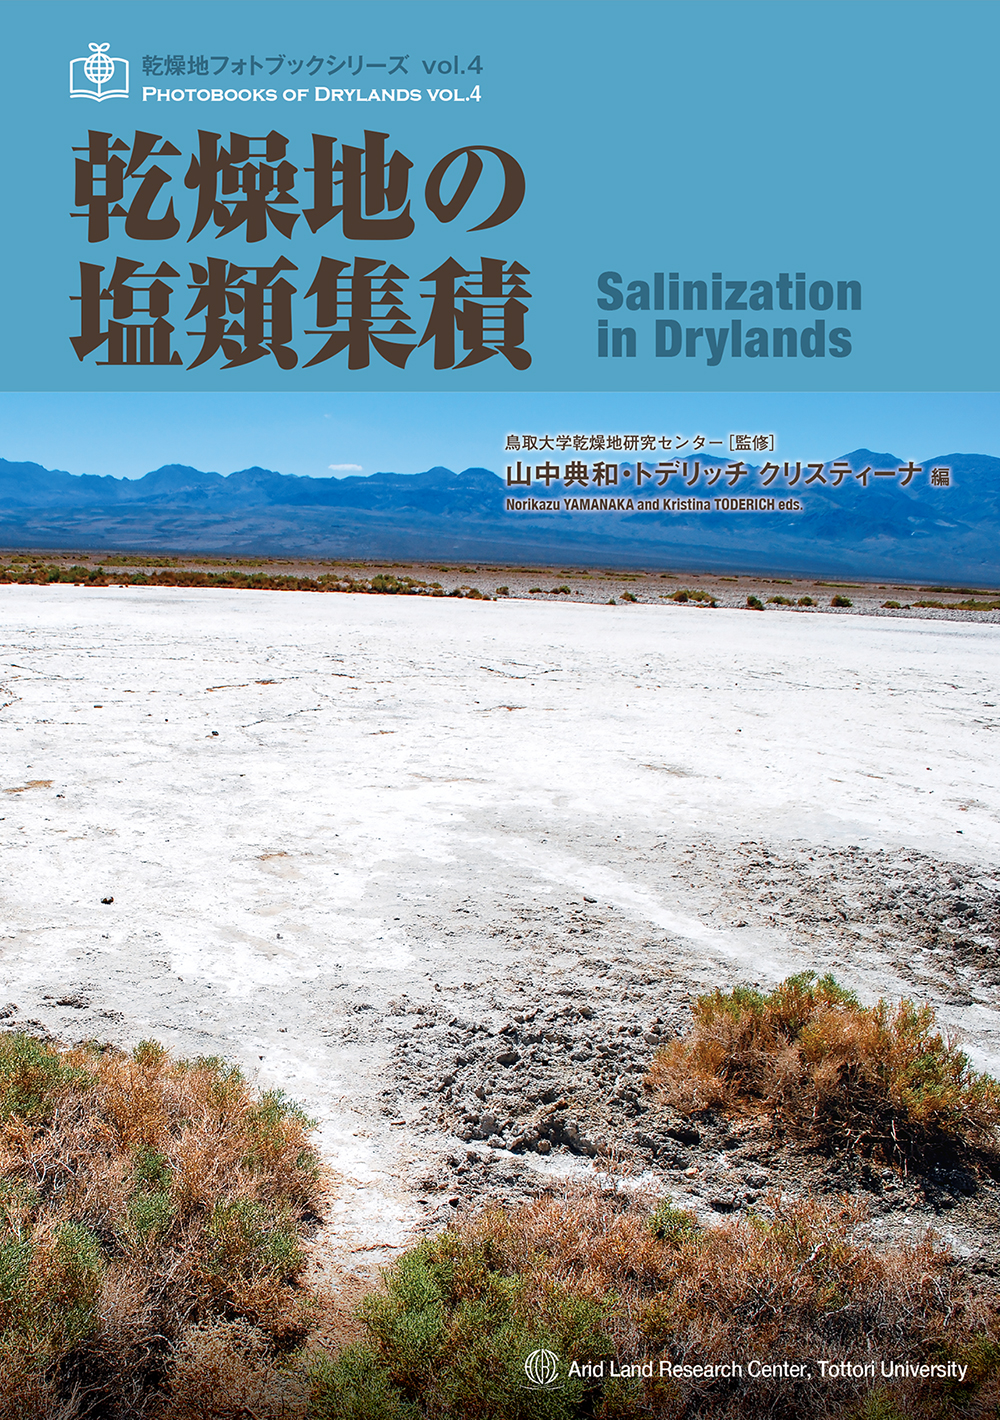 IMAI PRINTING NEWS: 『乾燥地フォトブックシリーズvol.4 乾燥地の塩類集積』3/31発売